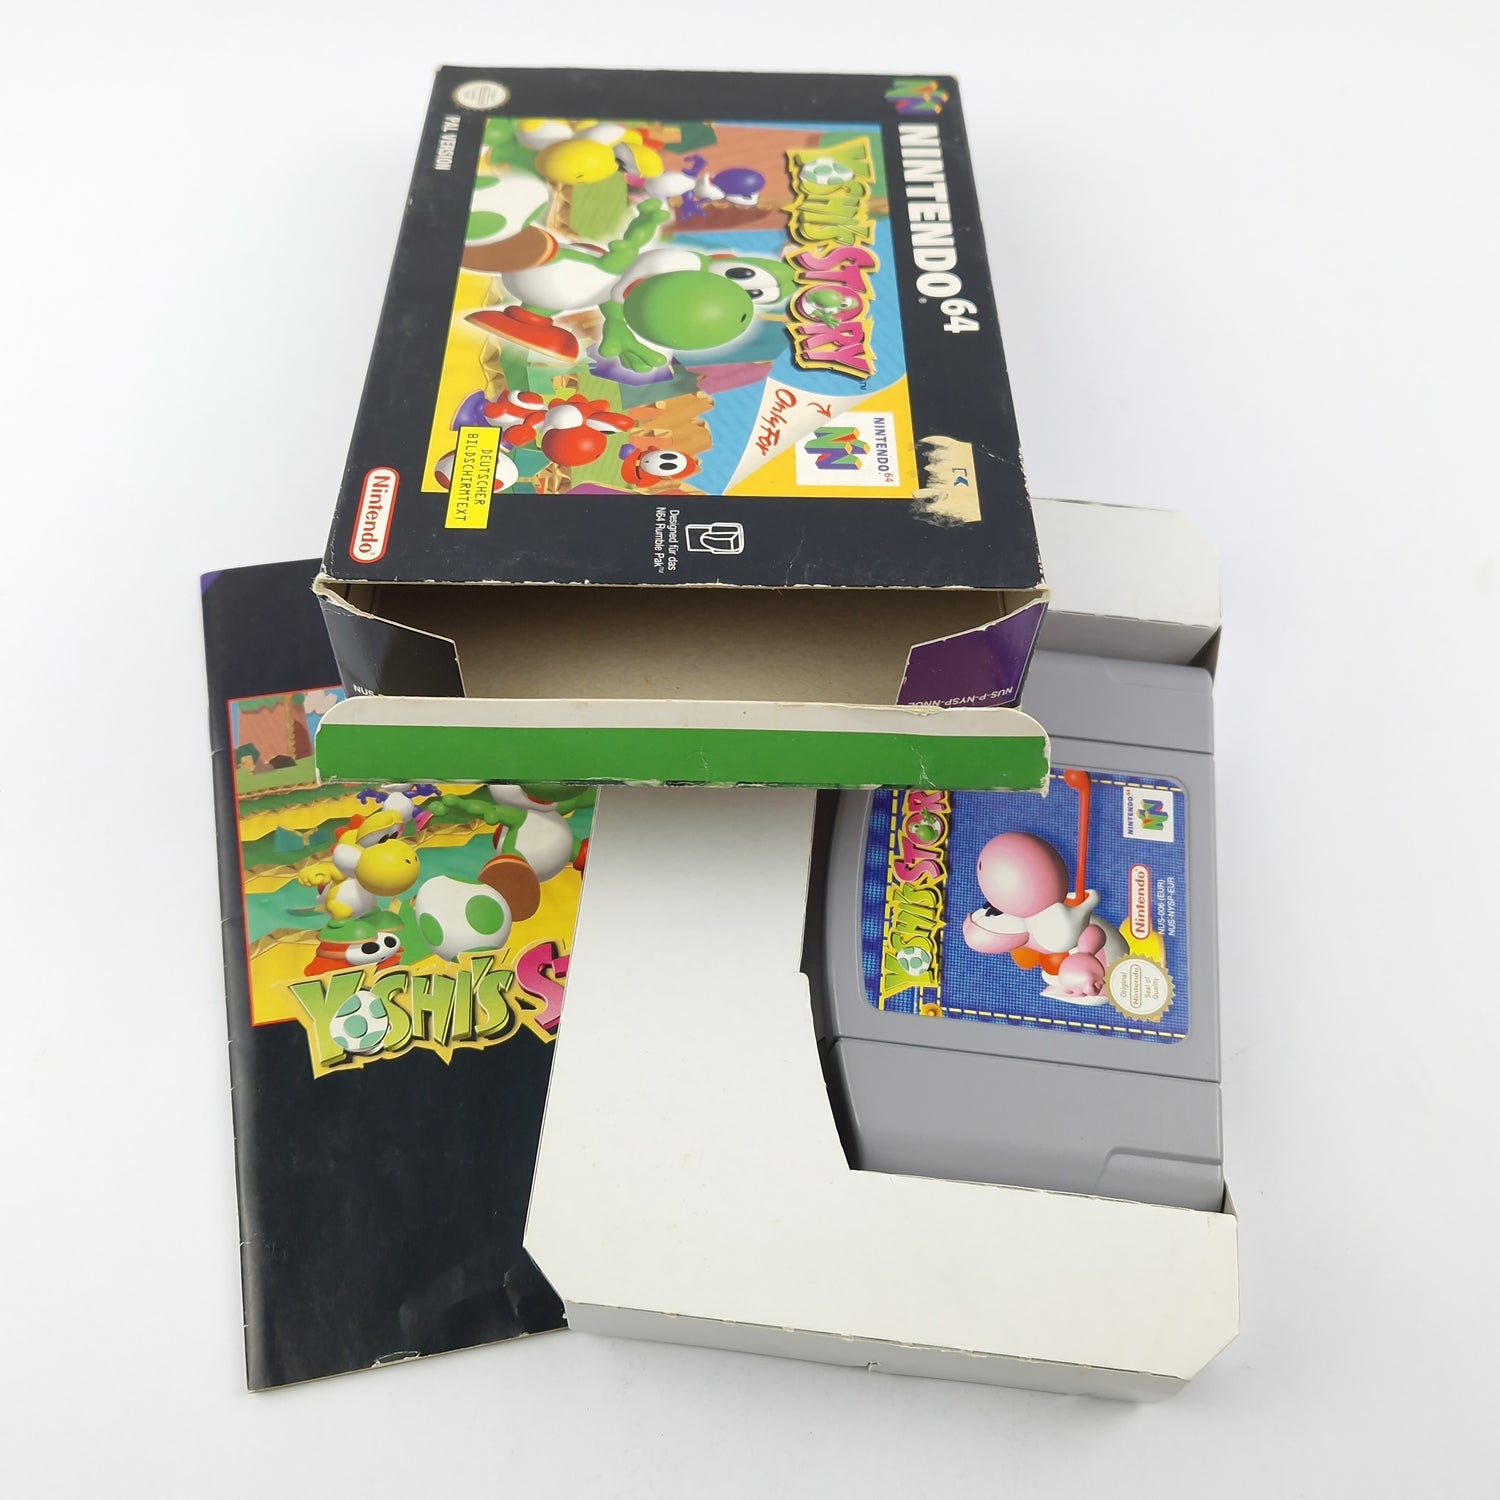 Nintendo 64 Spiel : Yoshis Story - Modul Anleitung OVP / PAL N64 Game